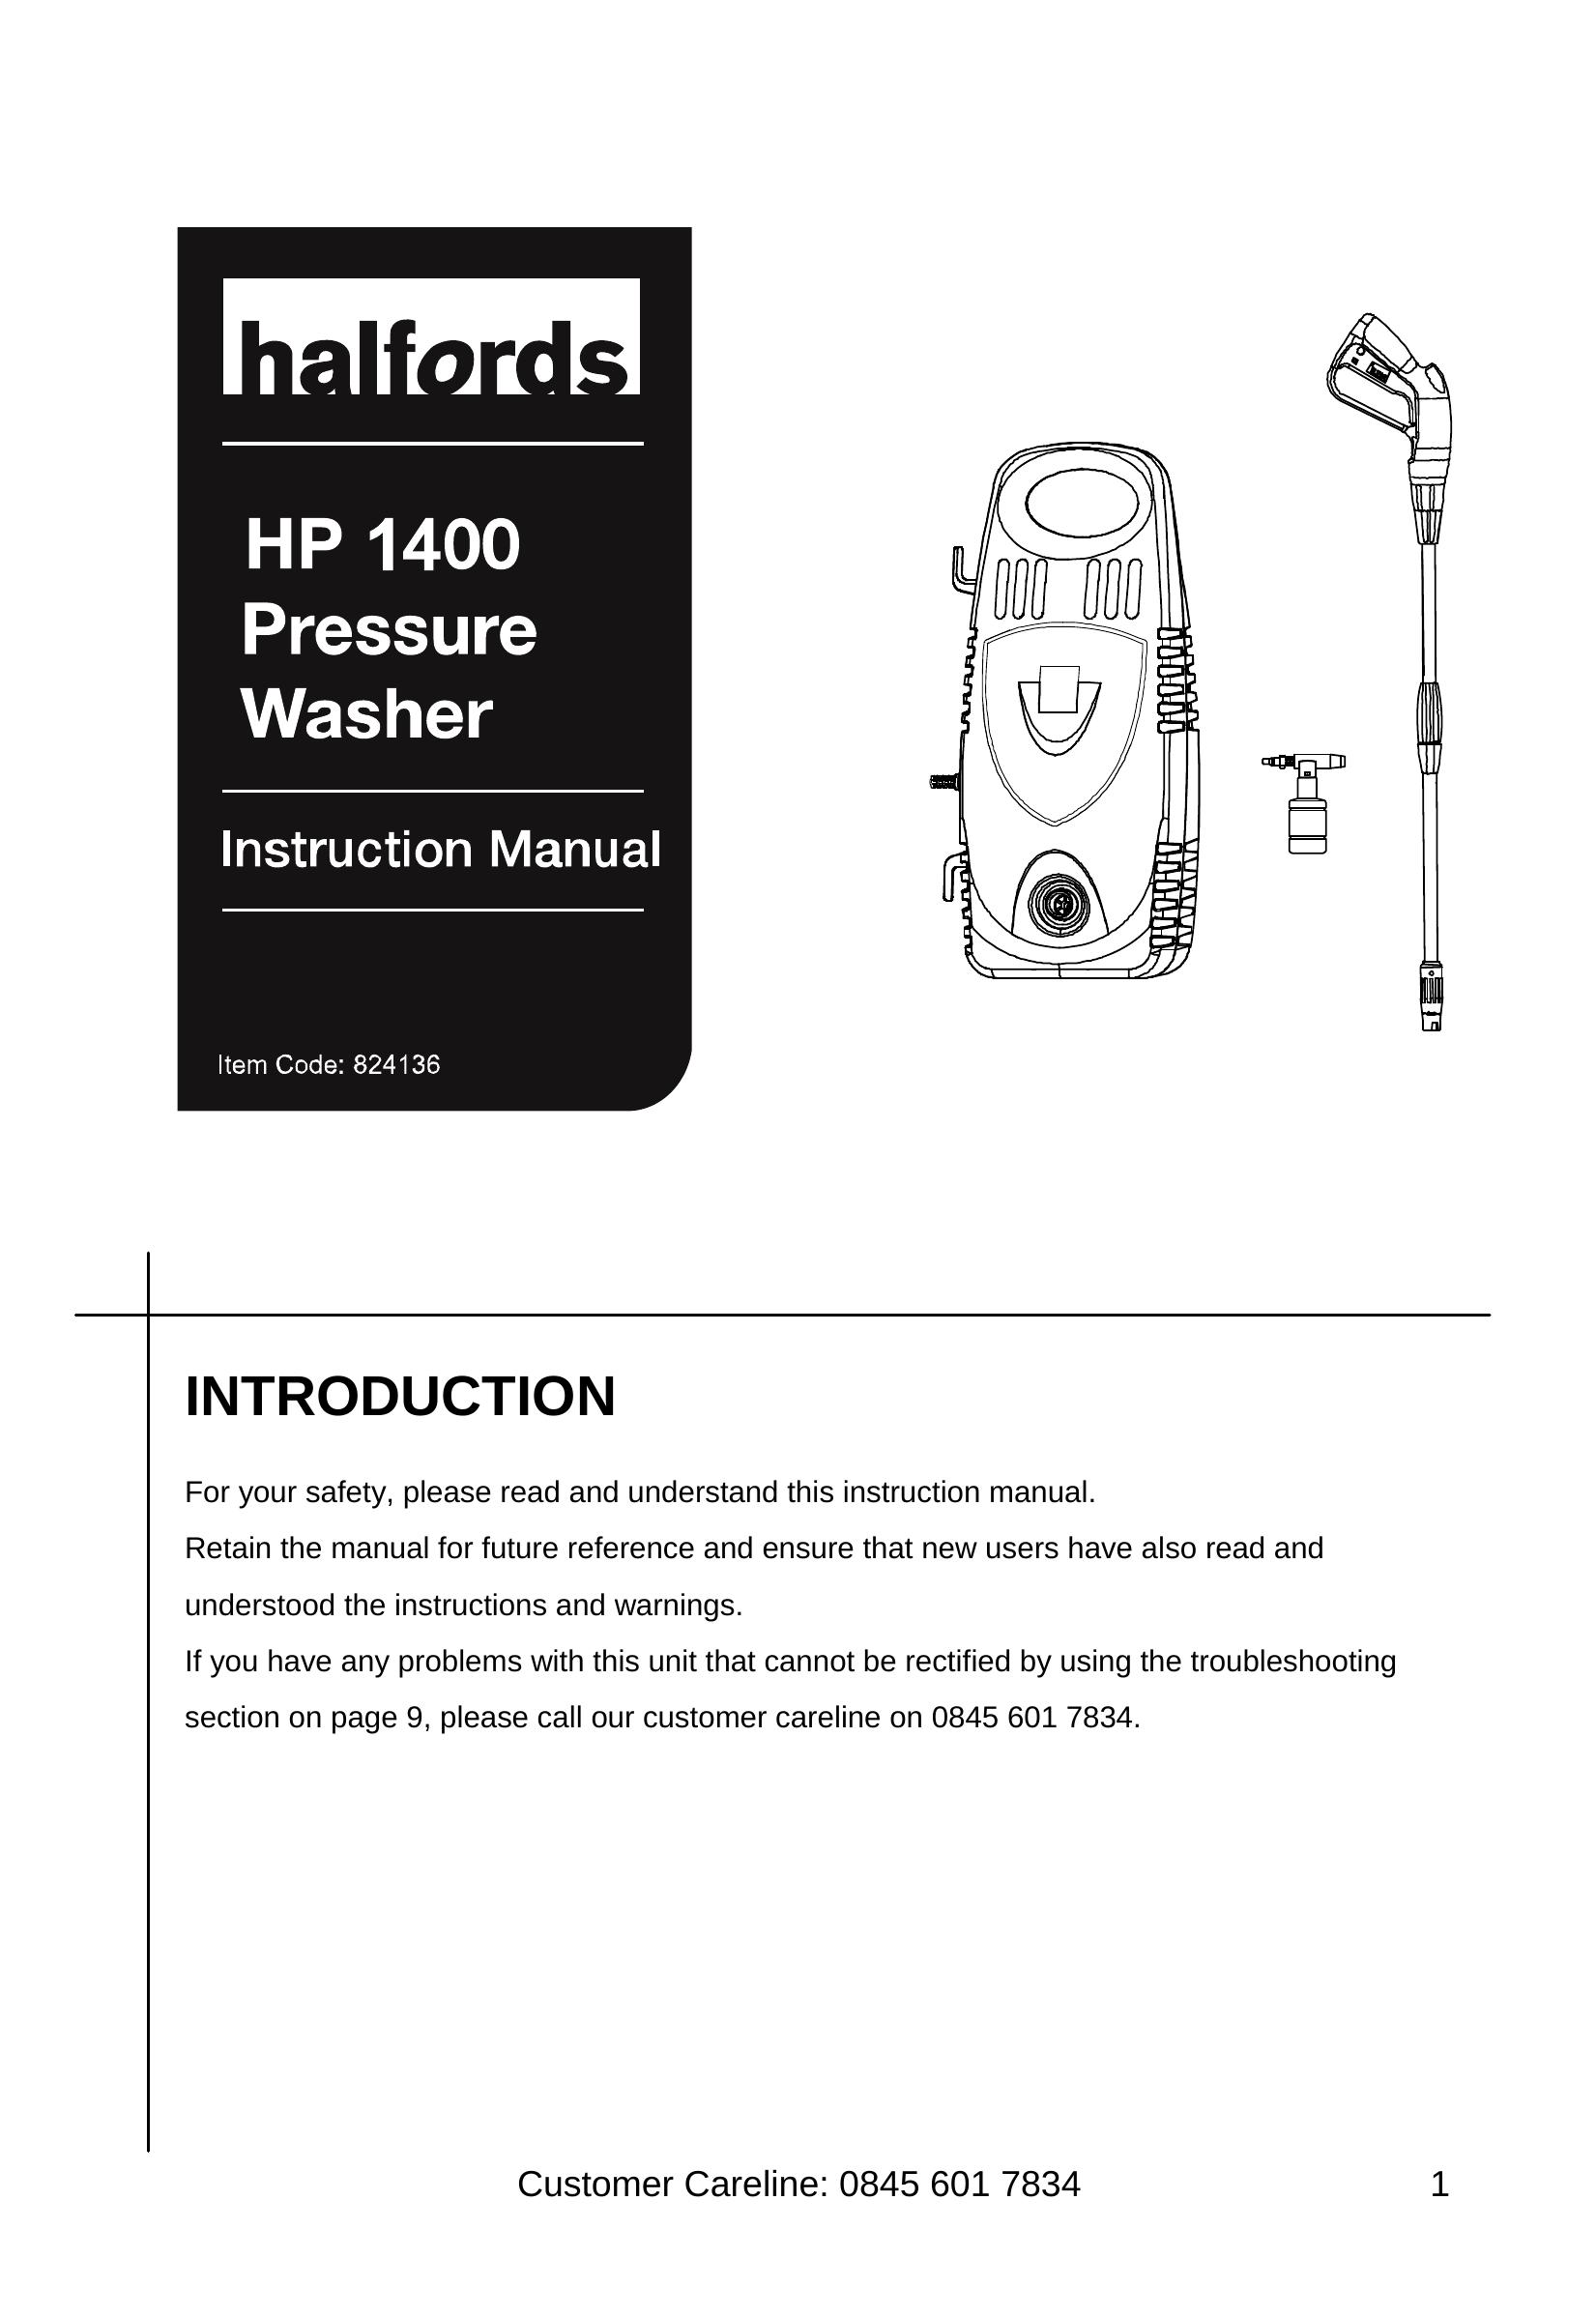 Halfords HP 1400 Pressure Washer User Manual